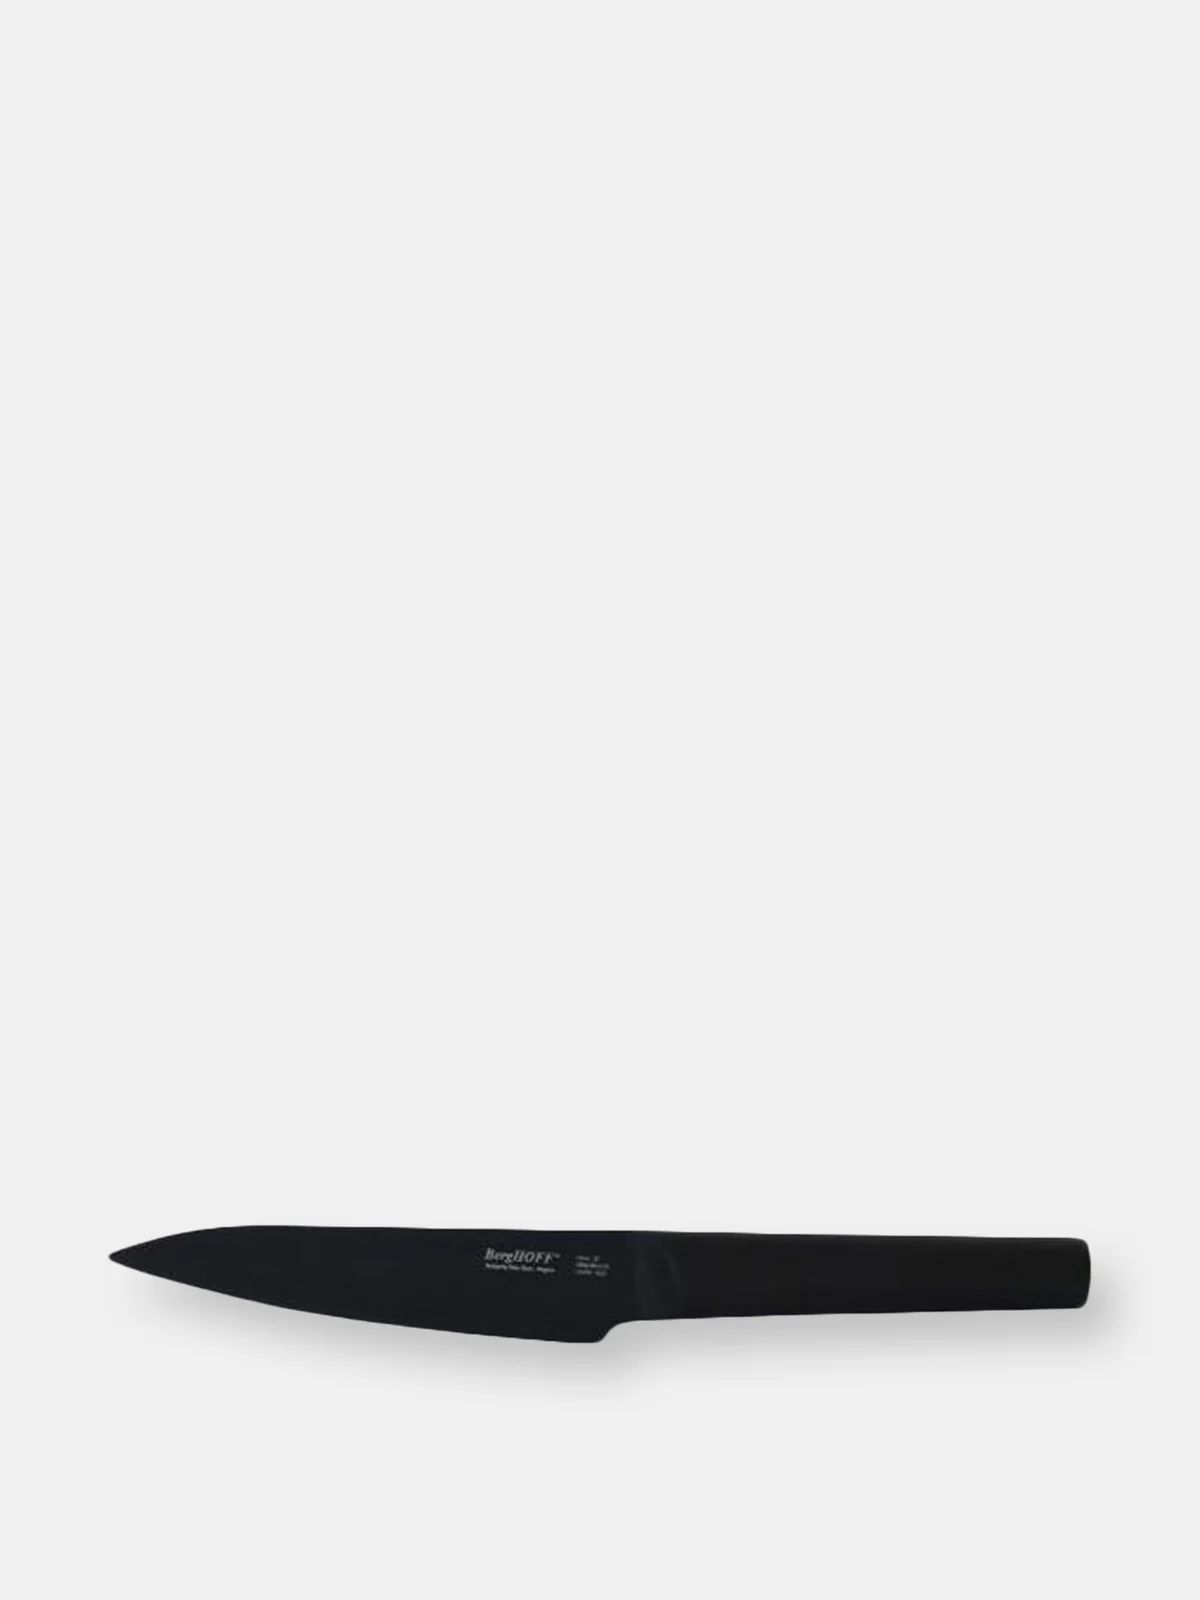 BergHOFF Ron 5" Utility Knife, Black | Verishop